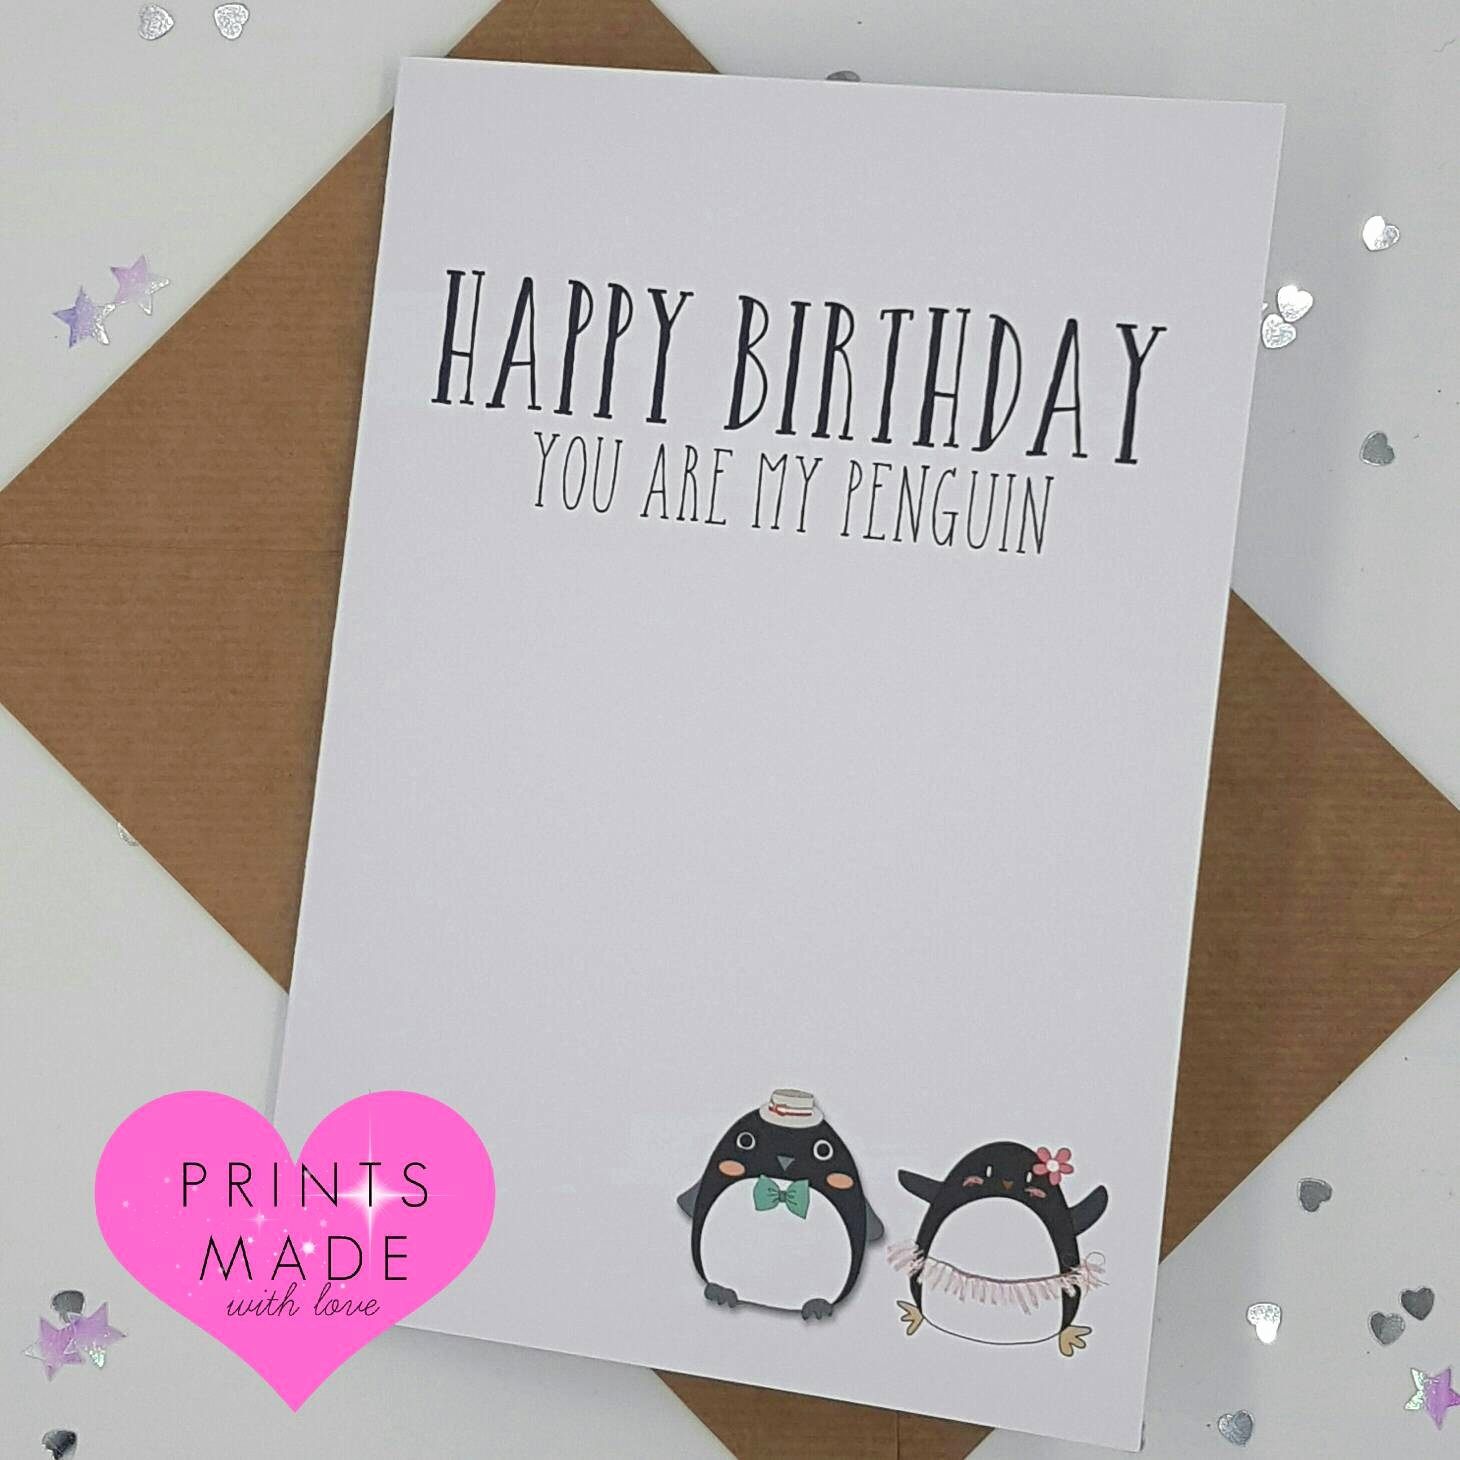 Unique Birthday Card Ideas For Boyfriend Awesome Birthday Cards For Boyfriend Unique Birthday Card Ideas For